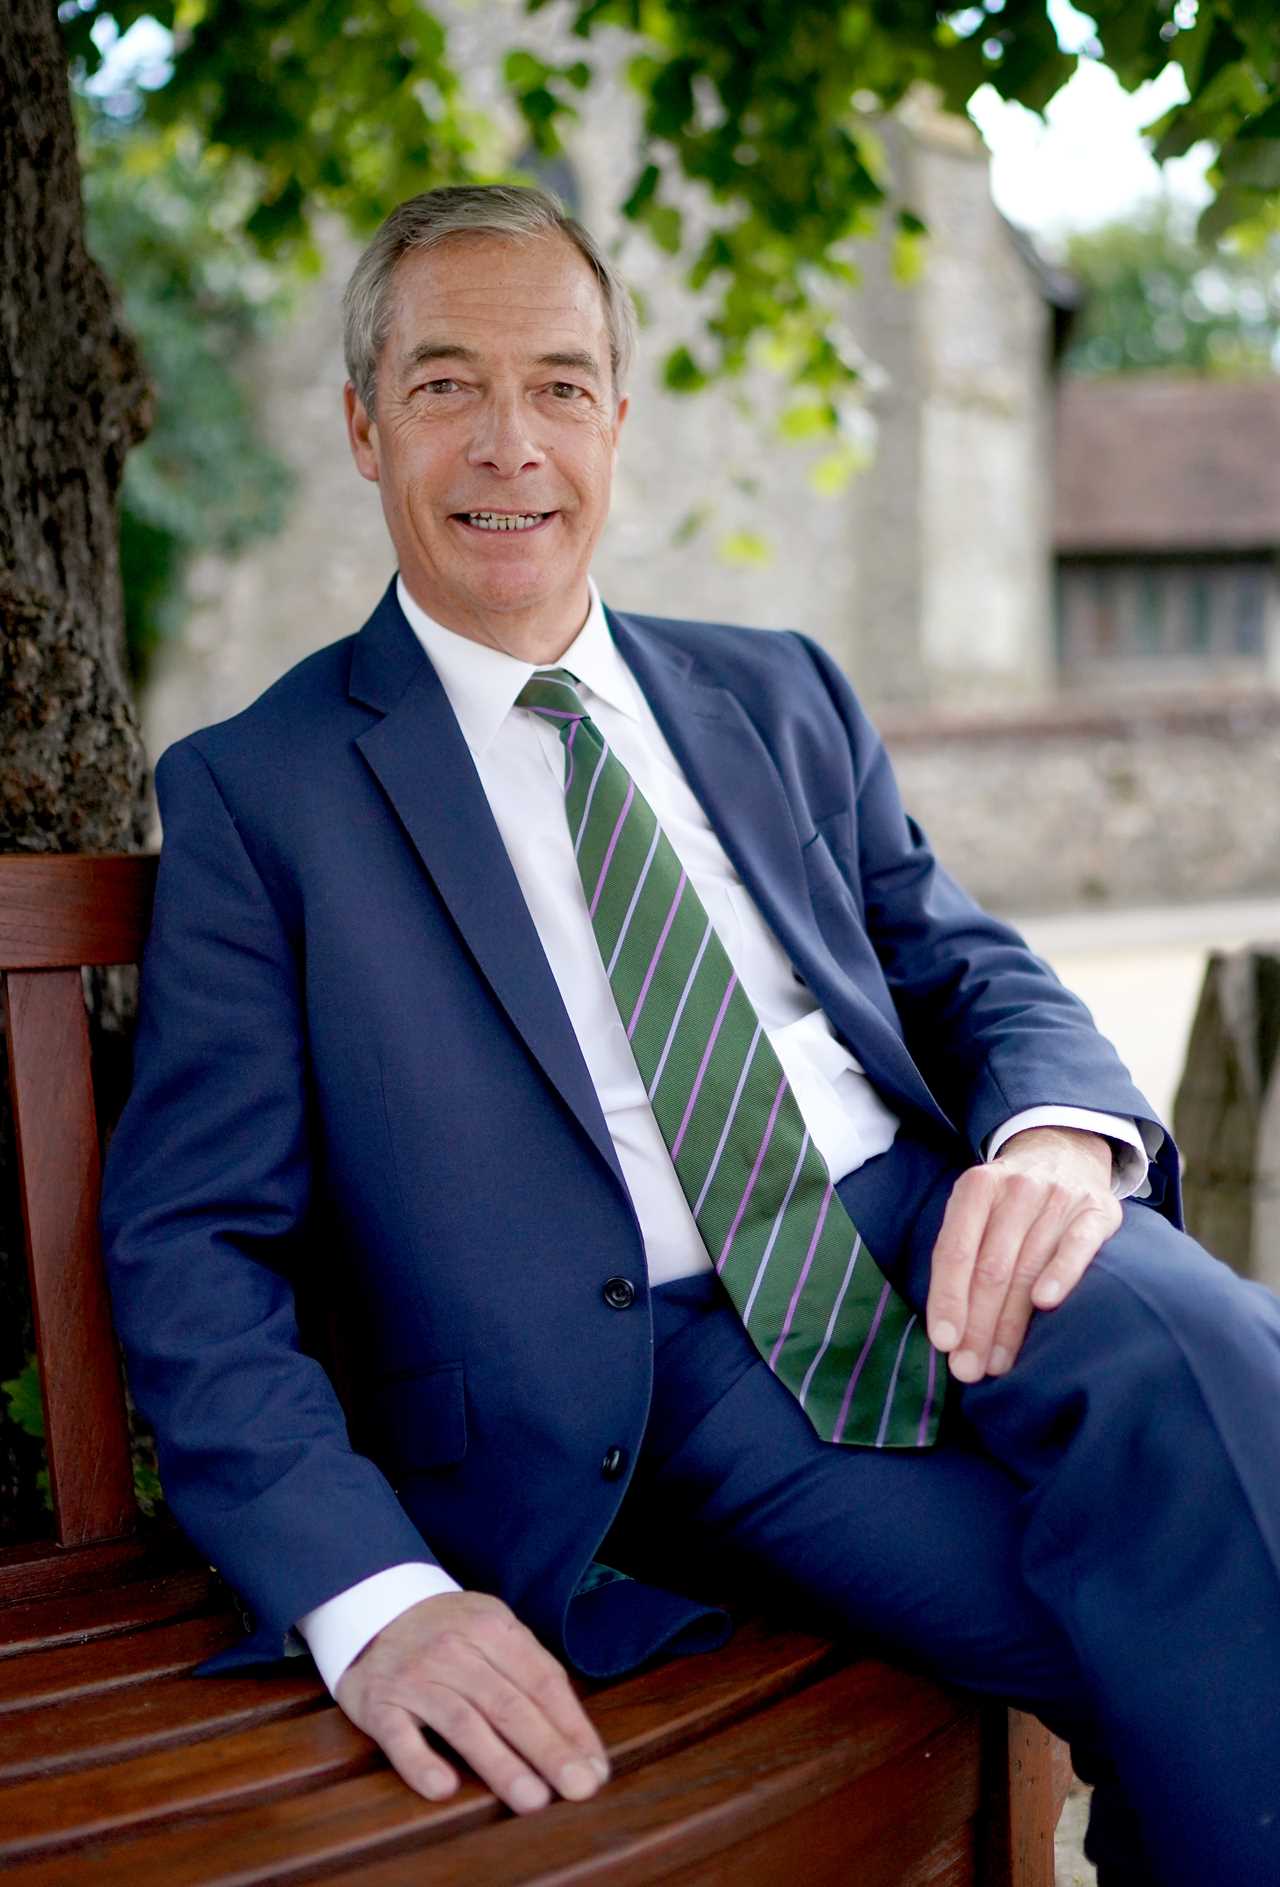 Nigel Farage slams review of Coutts debanking as 'whitewash'